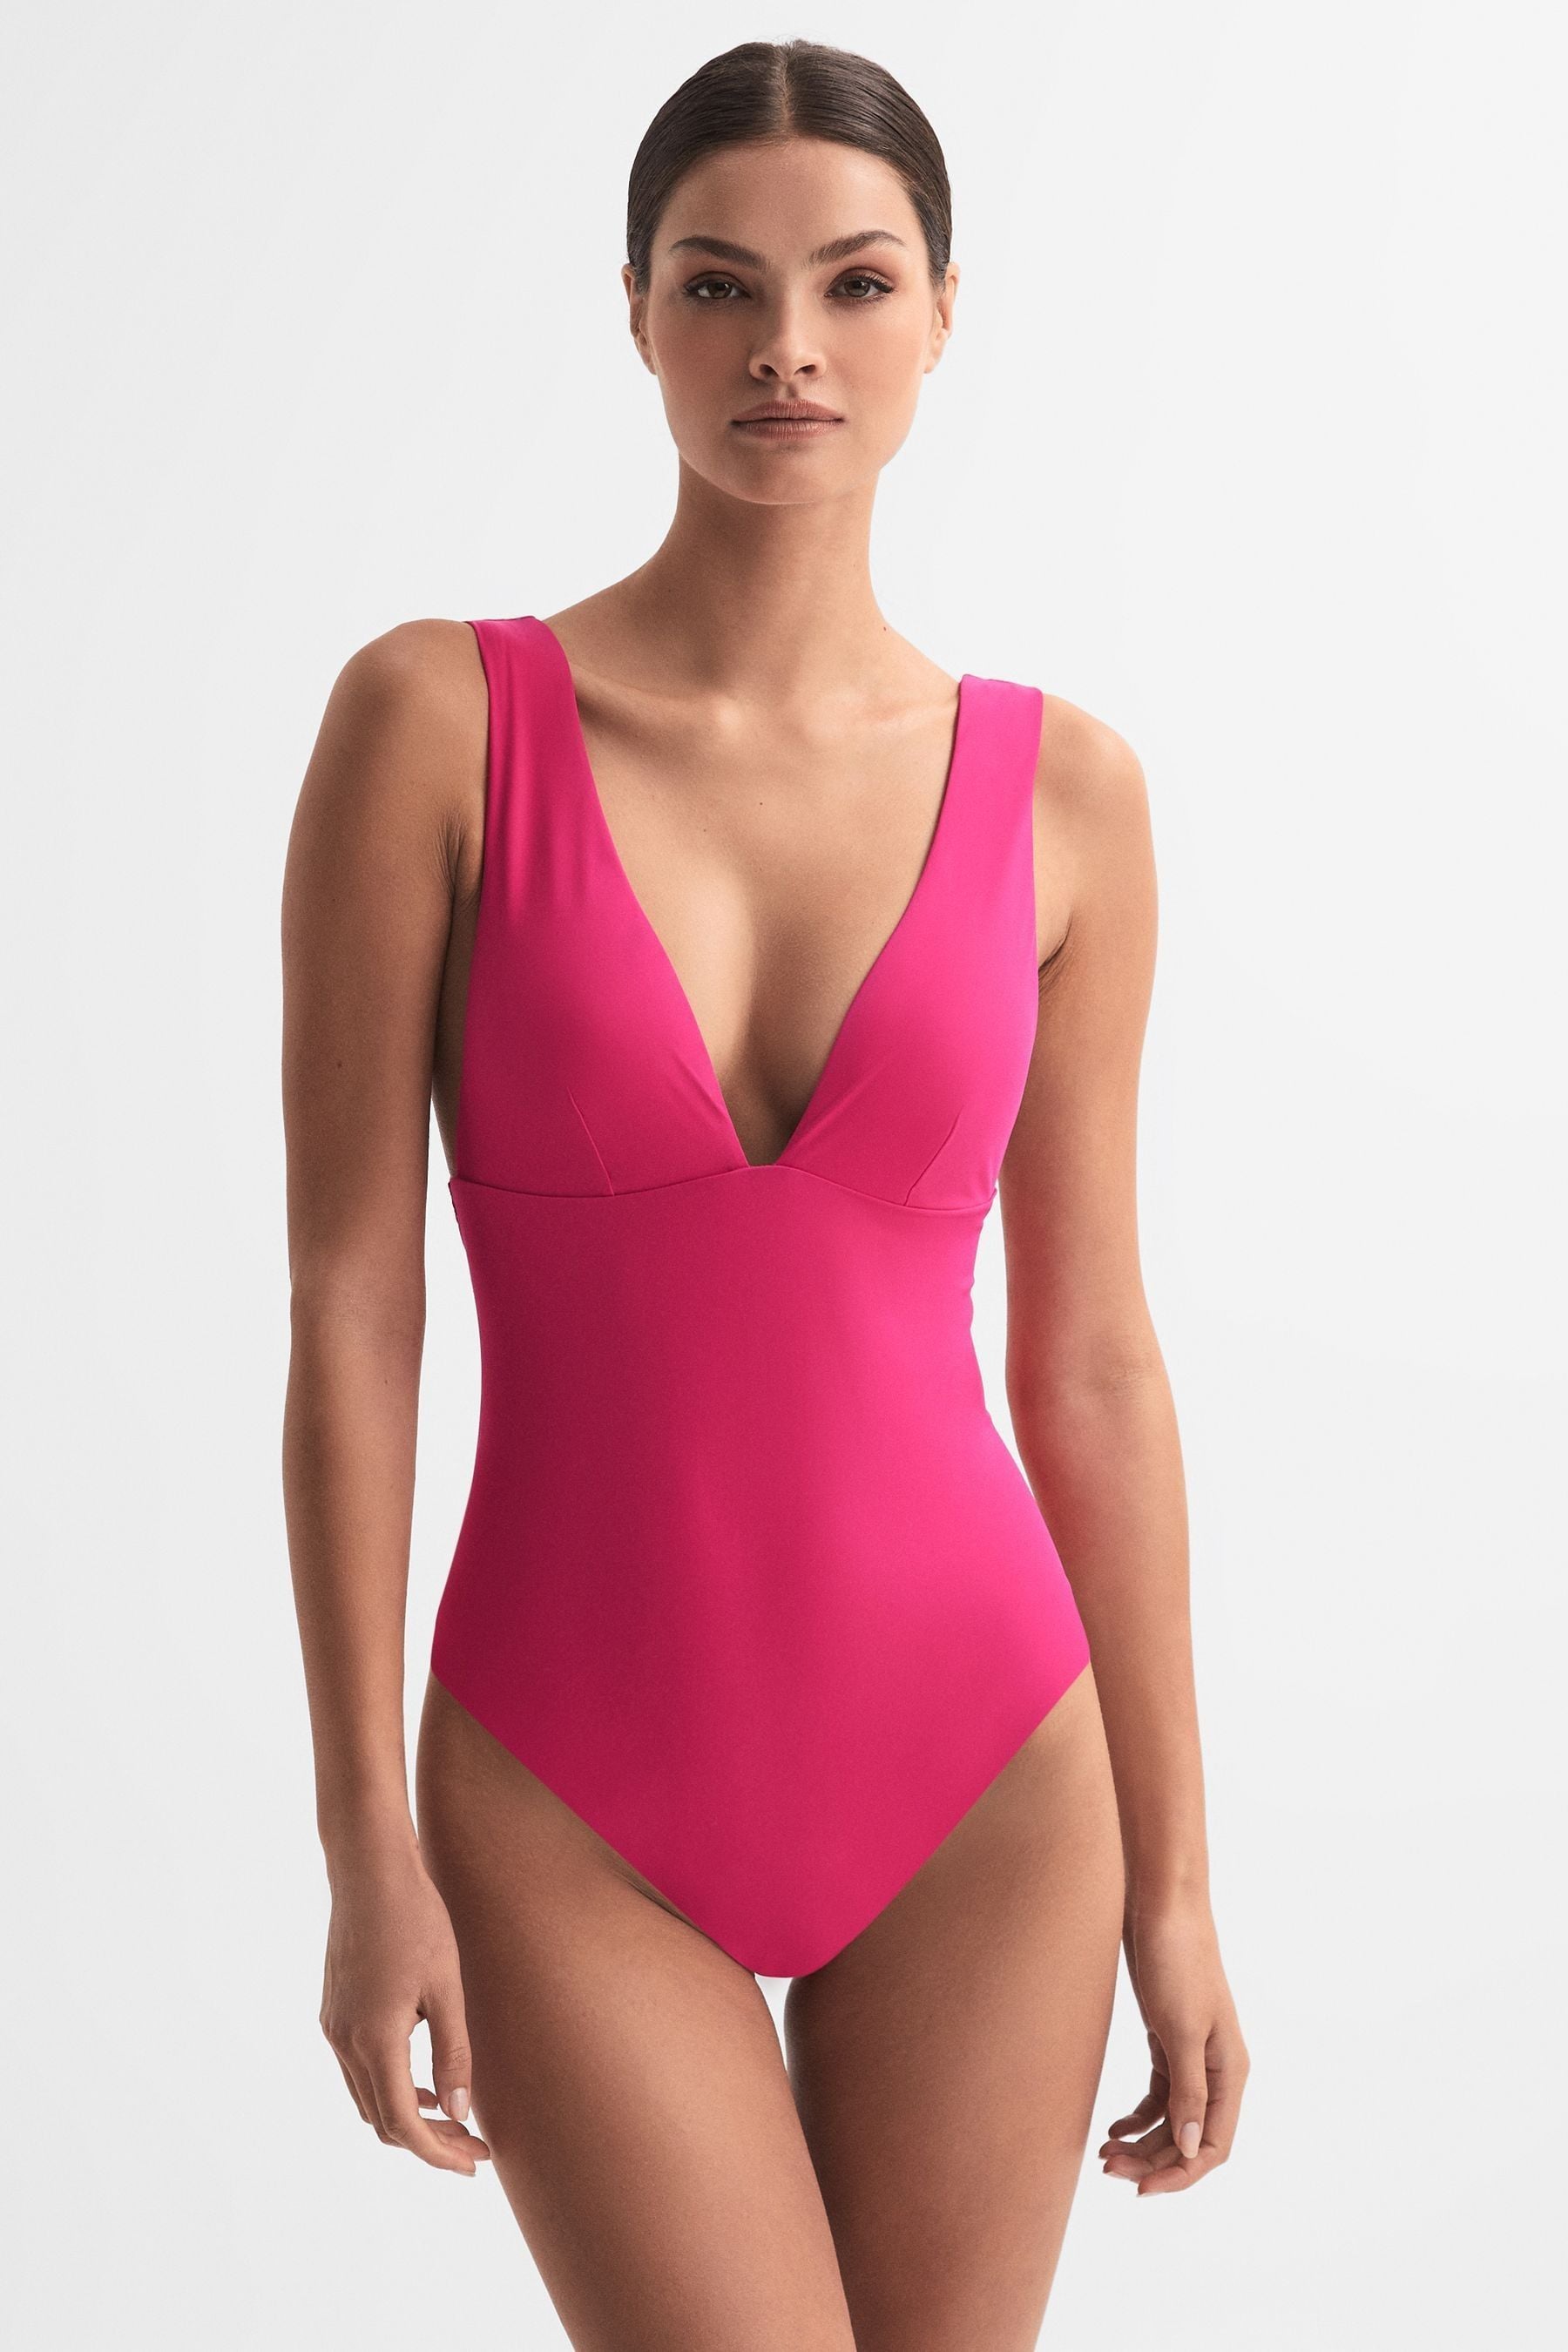 Reiss Luna - Pink Italian Fabric Swimsuit, Us 12